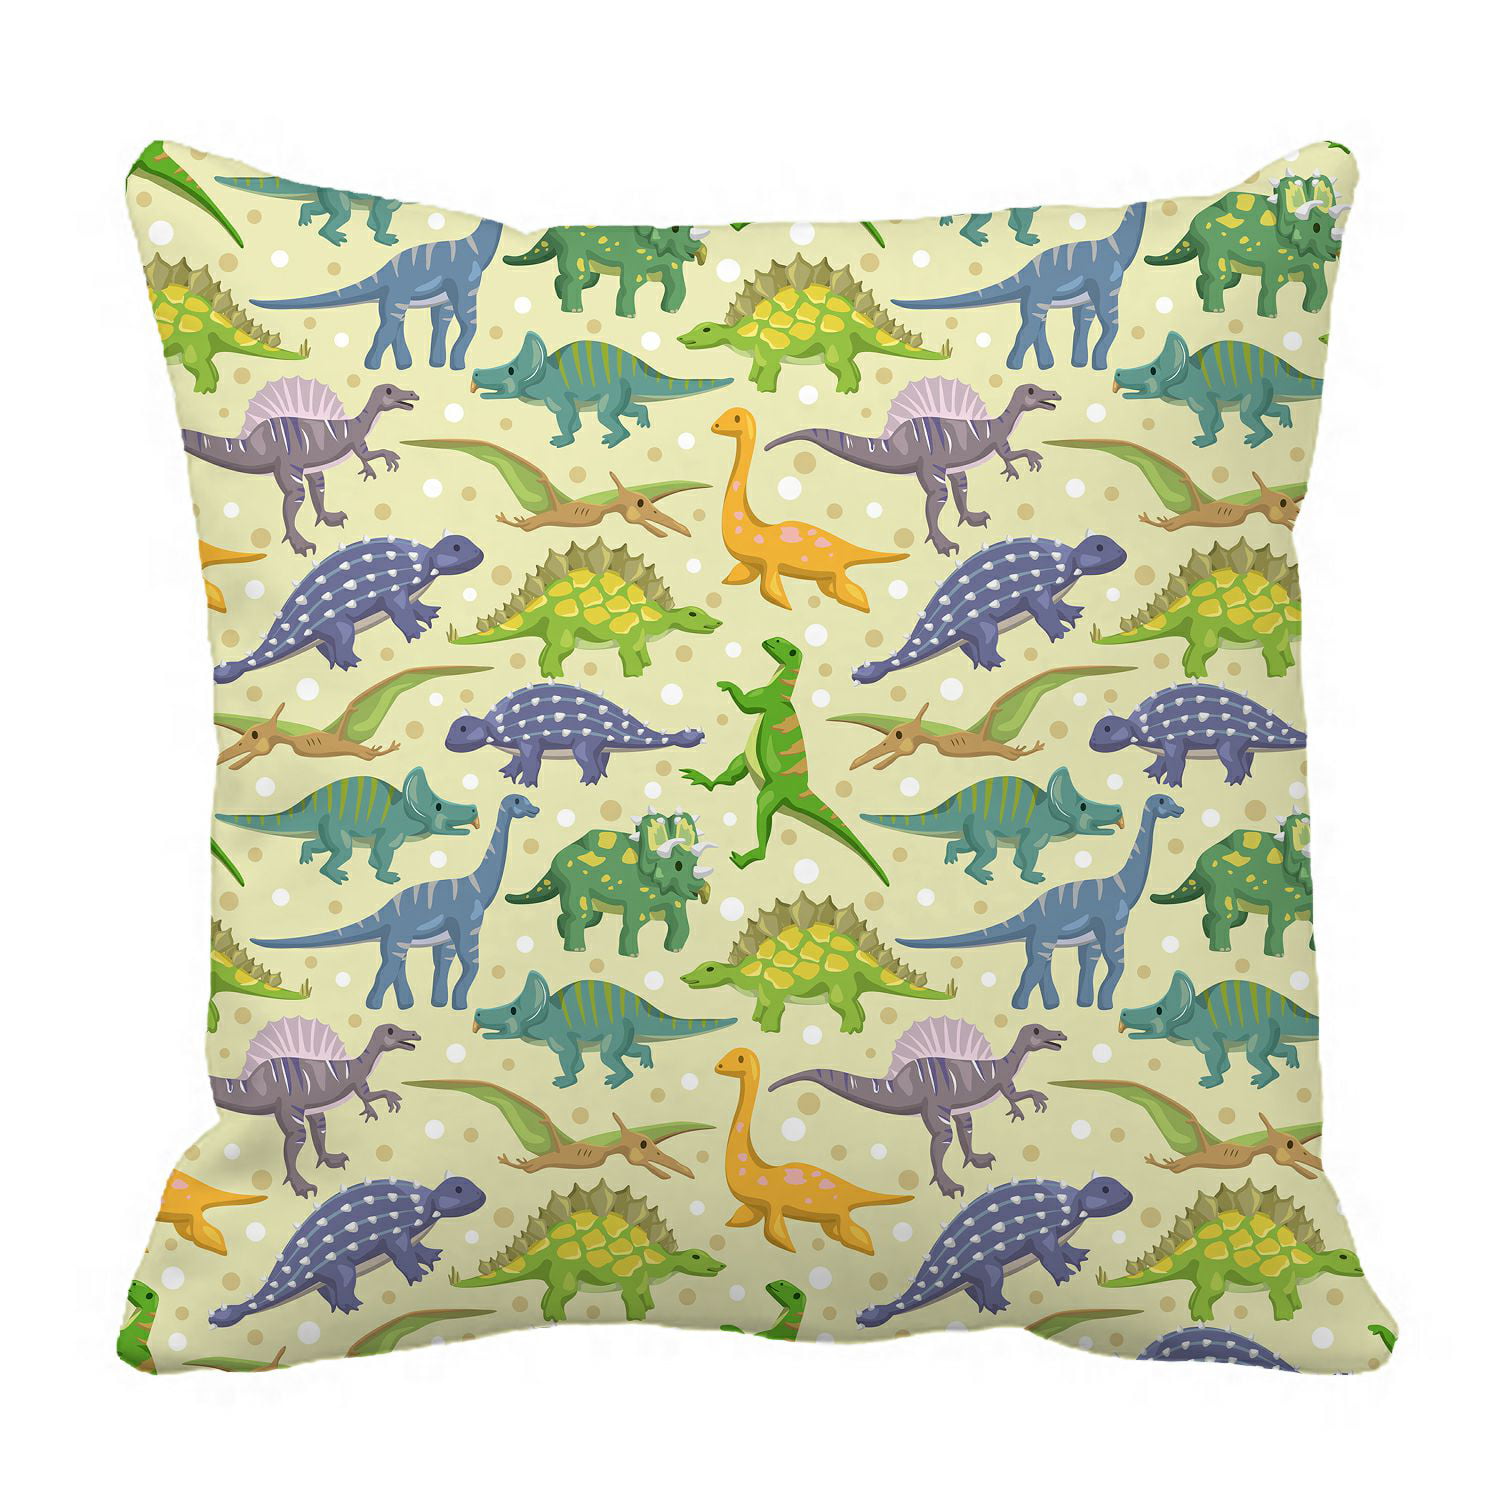 Phfzk Animal Pillow Case Cute Dinosaurs Pattern Pillowcase Throw